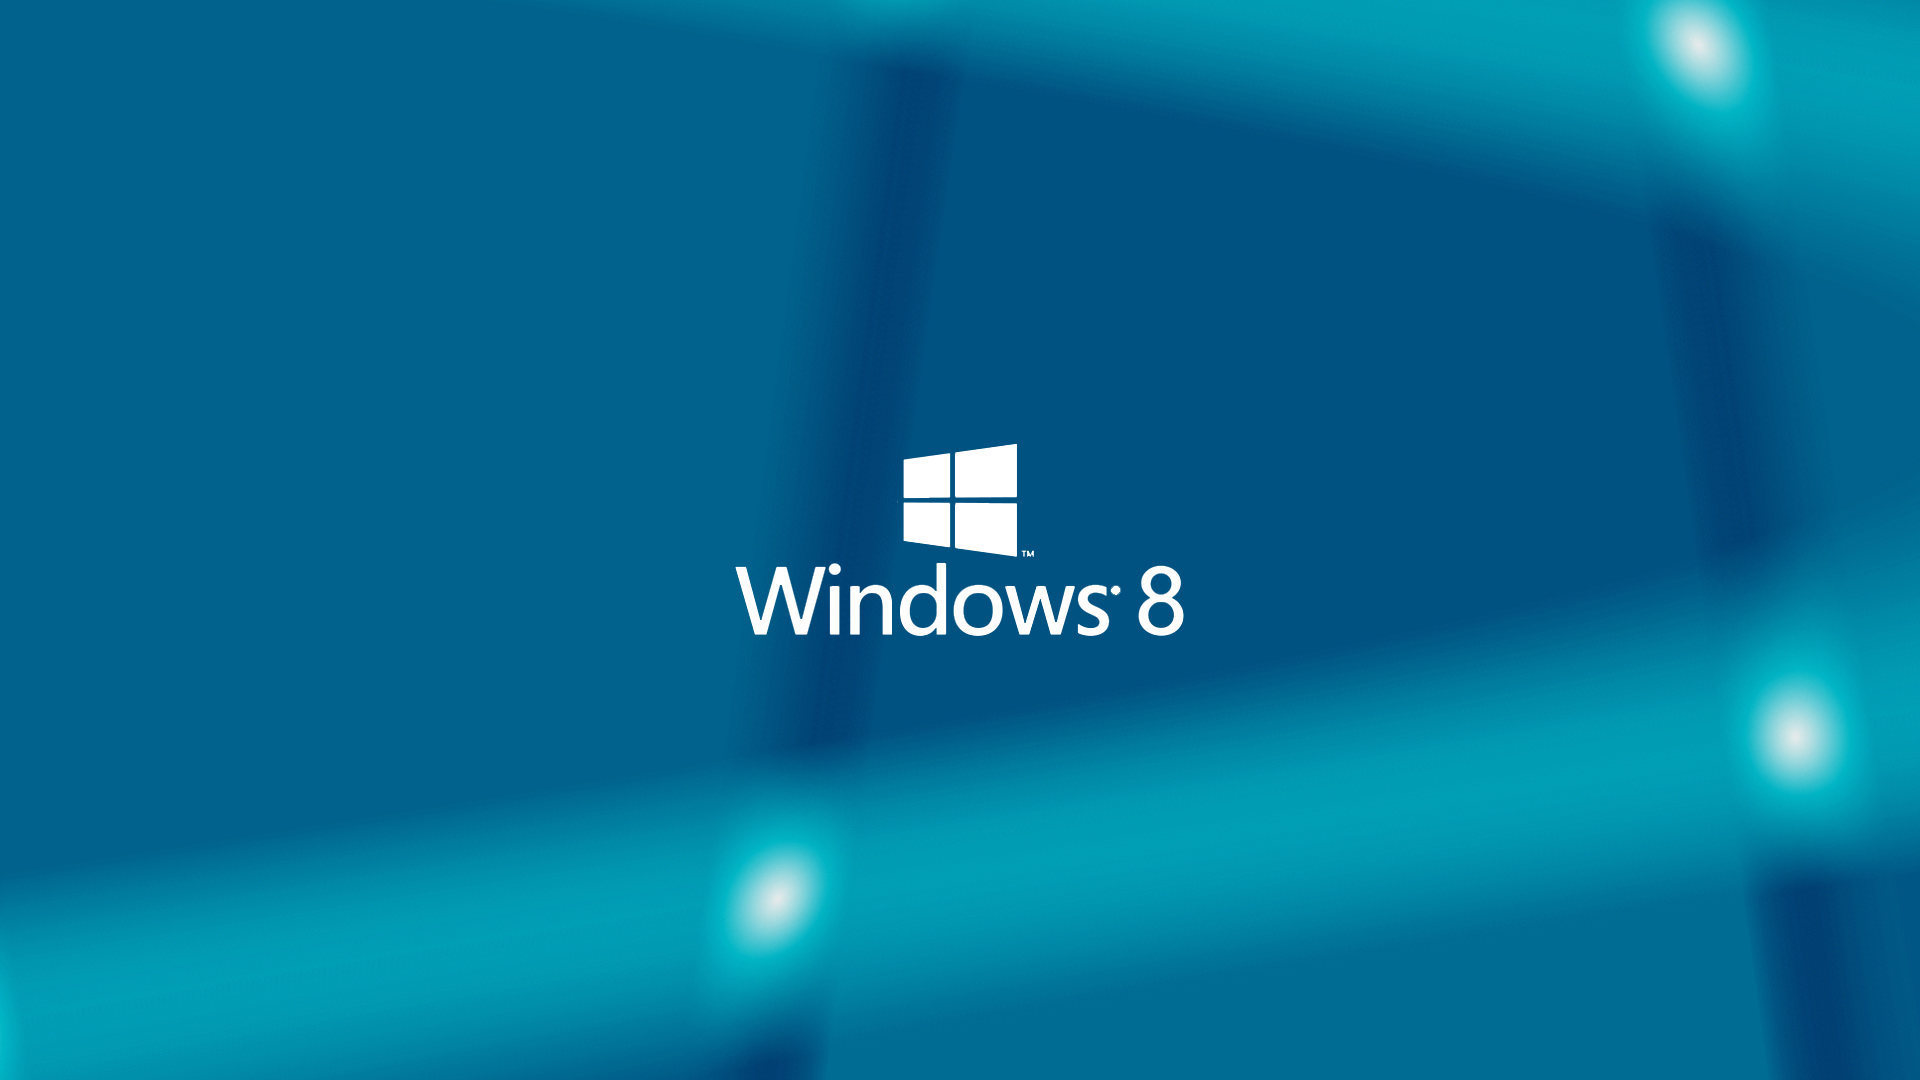 Windows 81 HD Wallpaper Windows 8 Logo And Photo HD Walllpaper Image